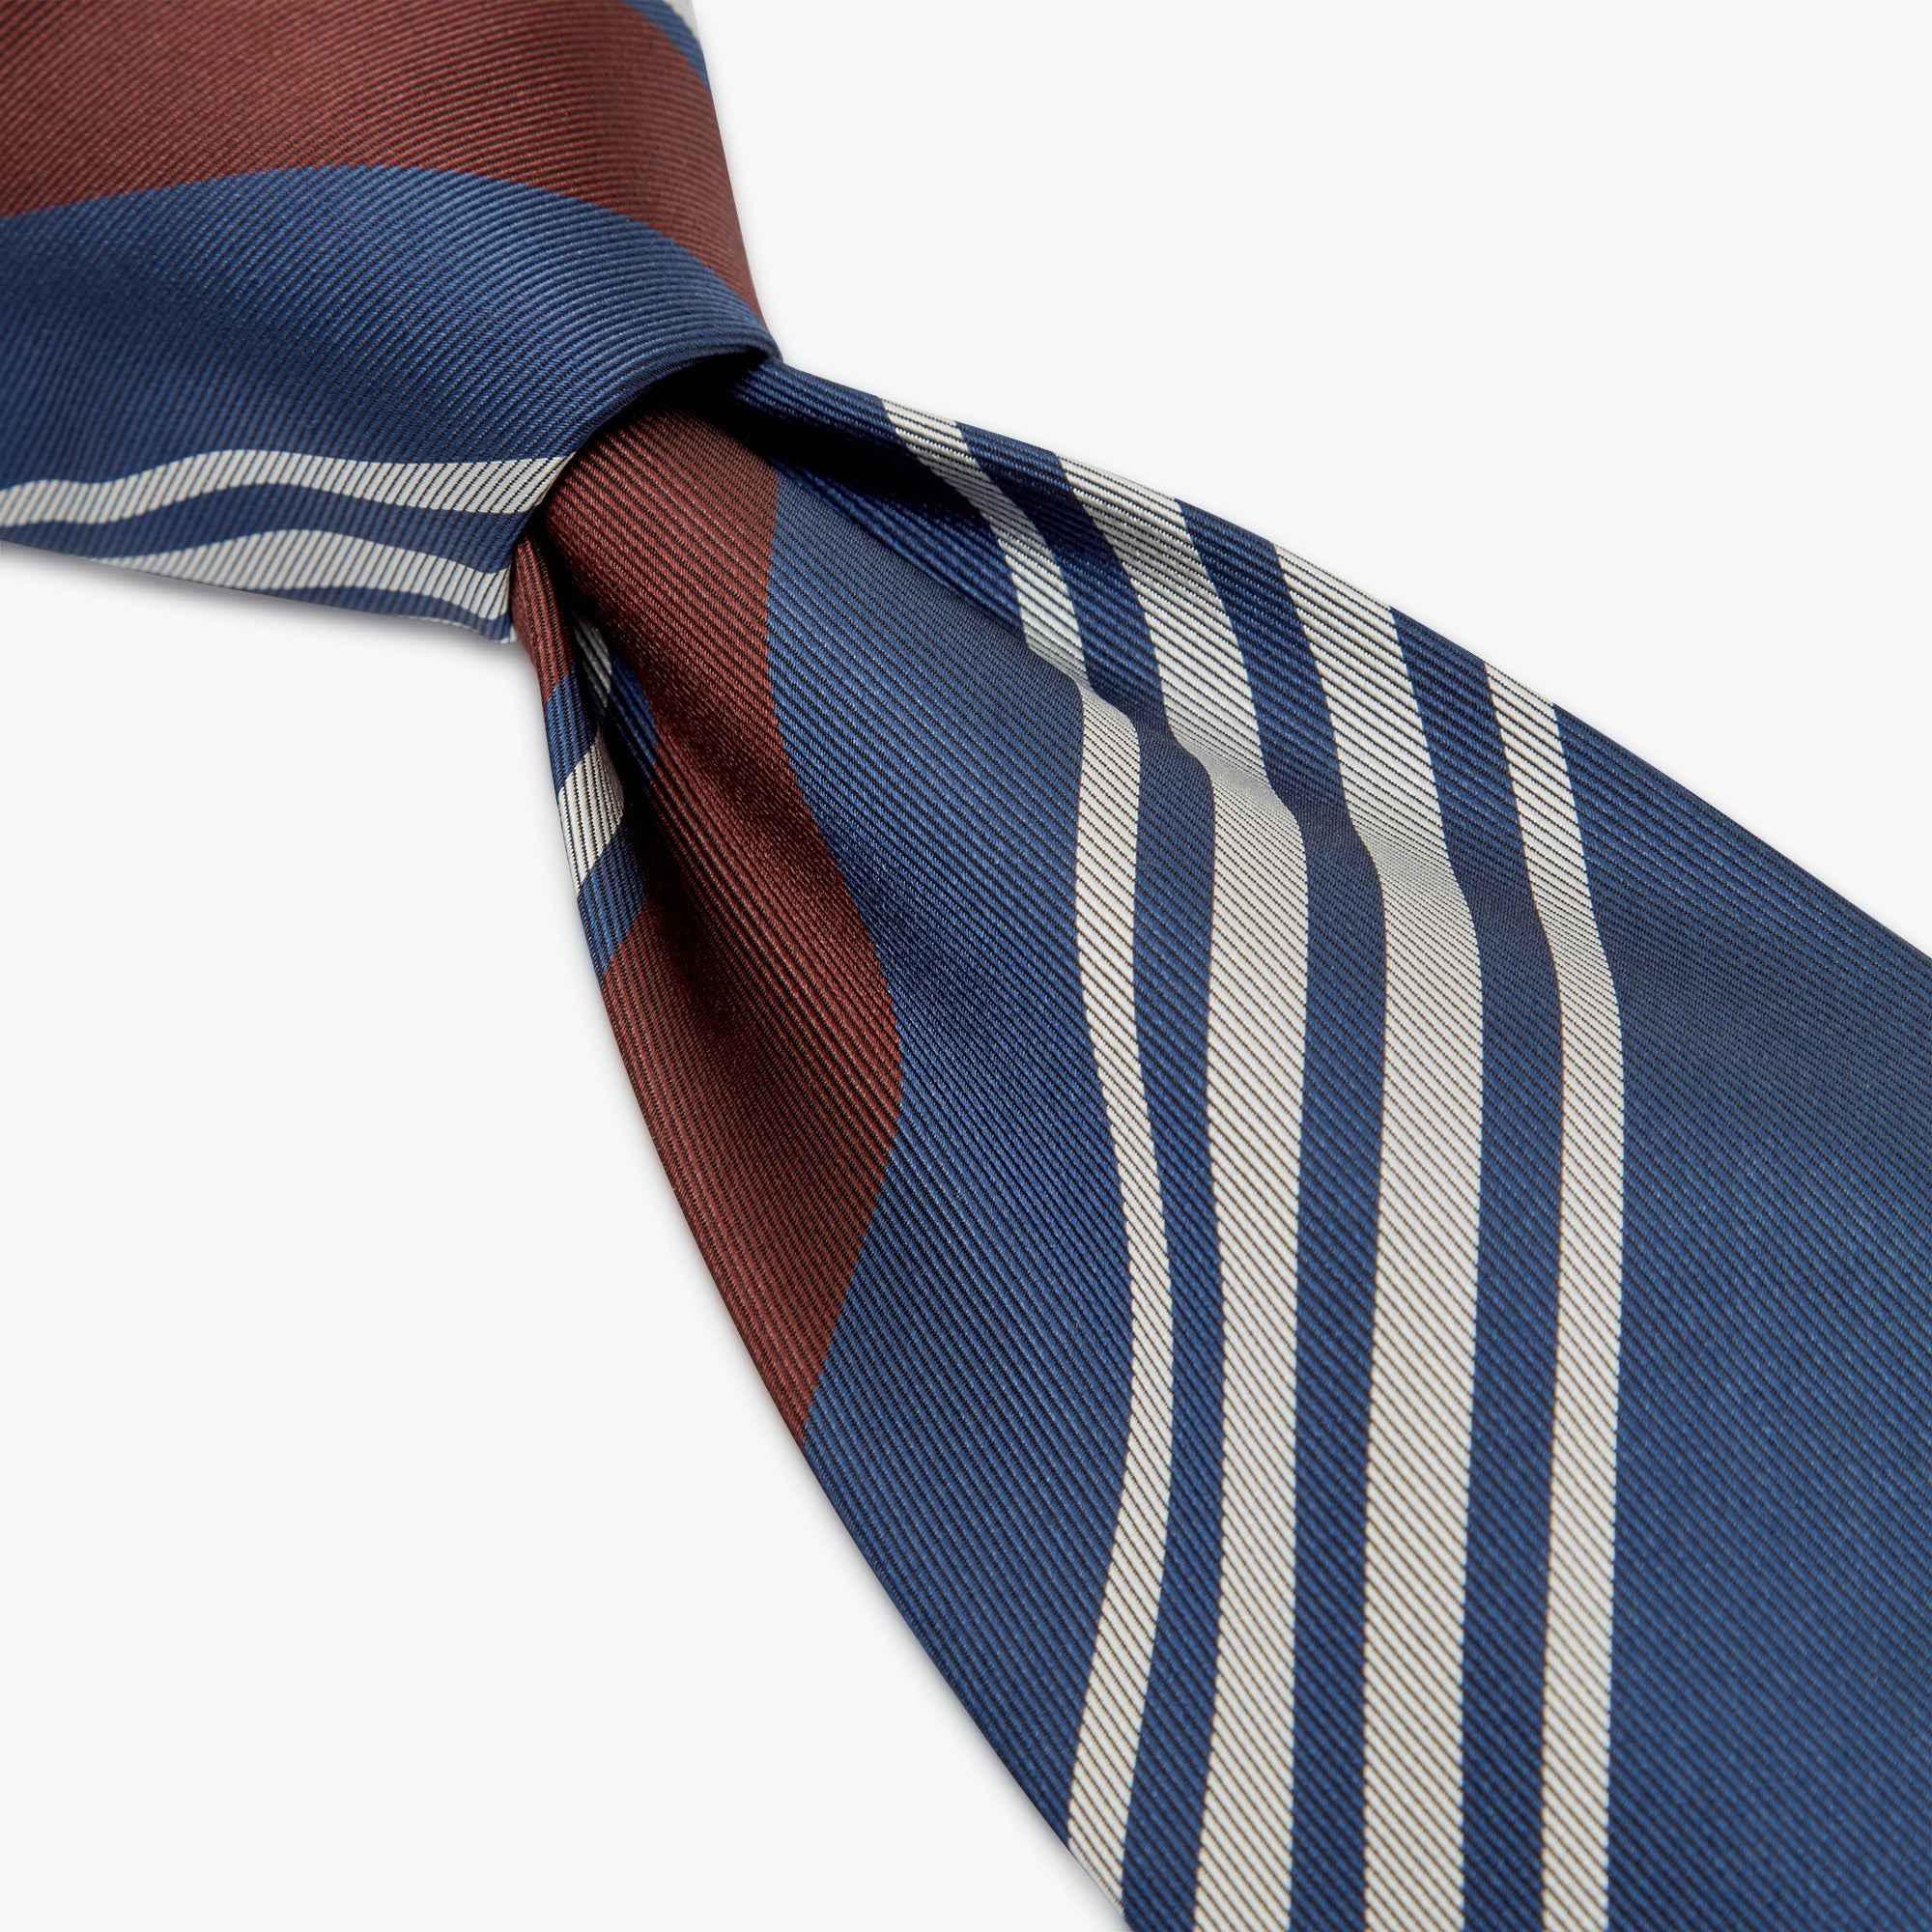 Cravatta 3 Pieghe In Seta Jacquard A Righe - Blu Marrone